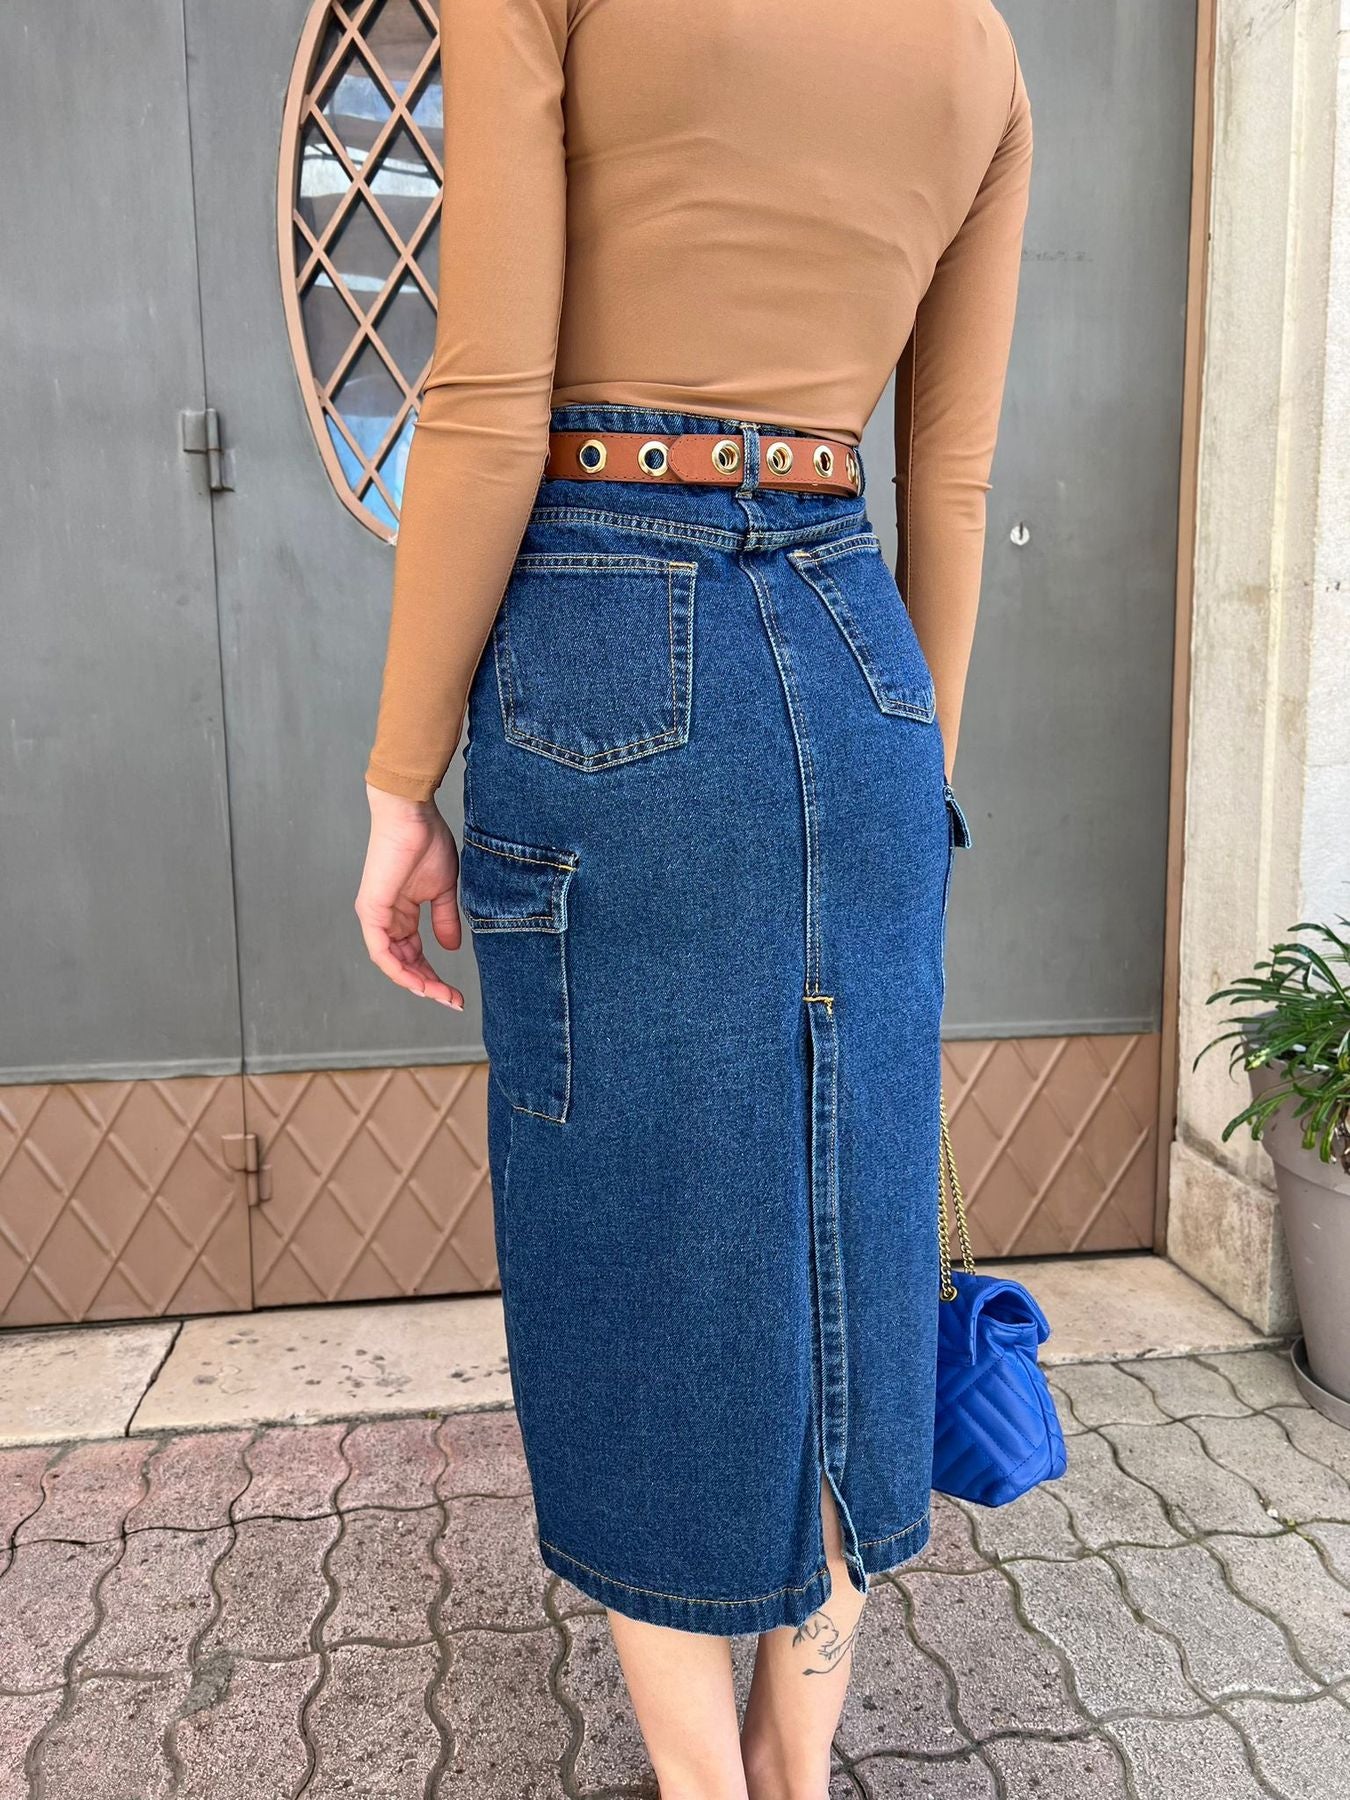 Denim skirt with big pockets